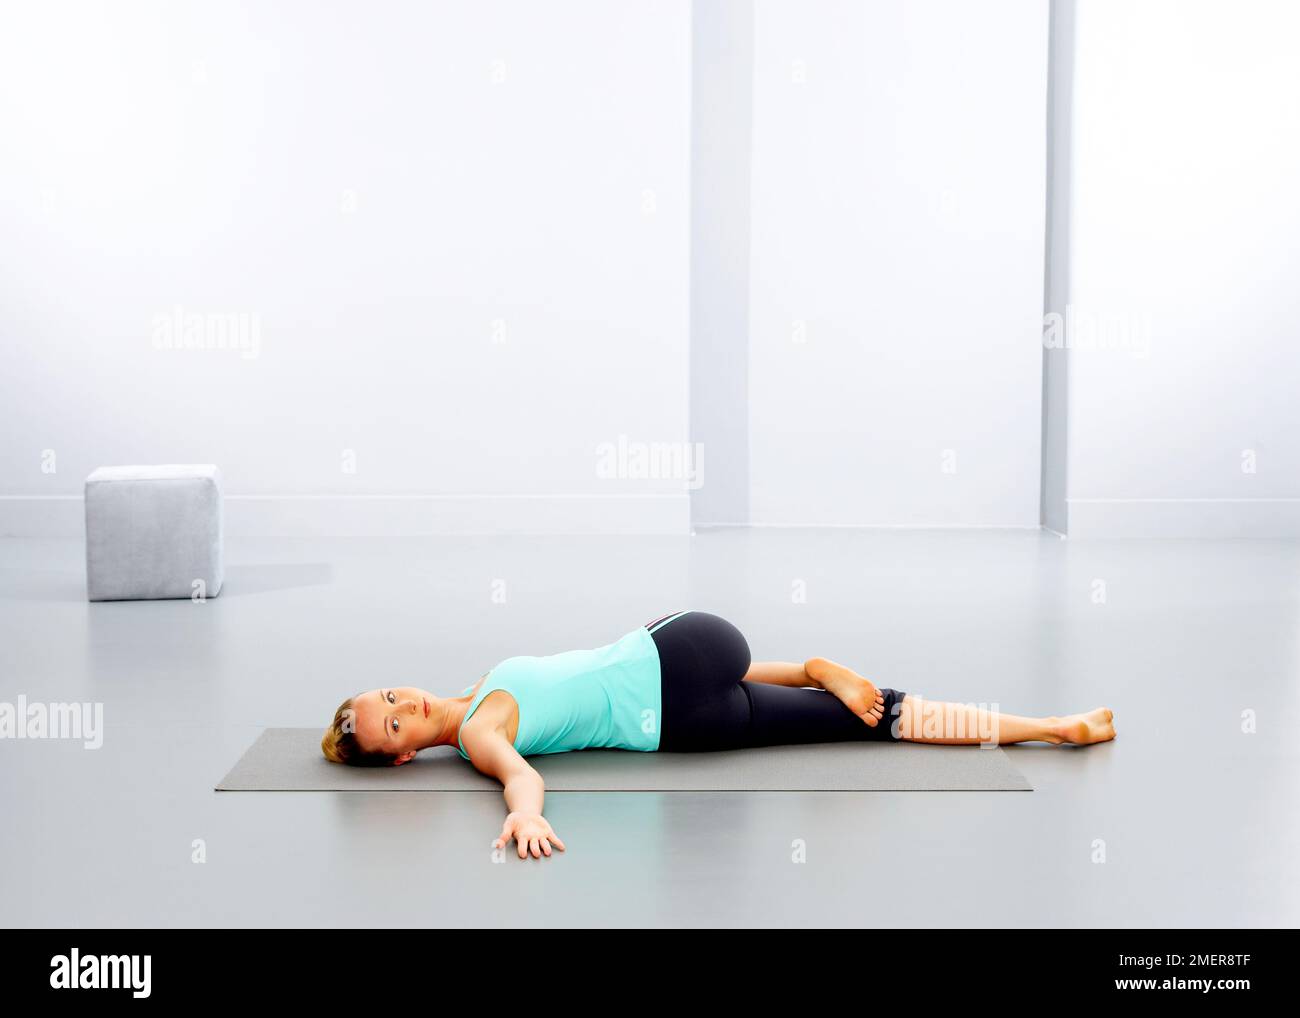 Woman practising yoga on mat Stock Photo